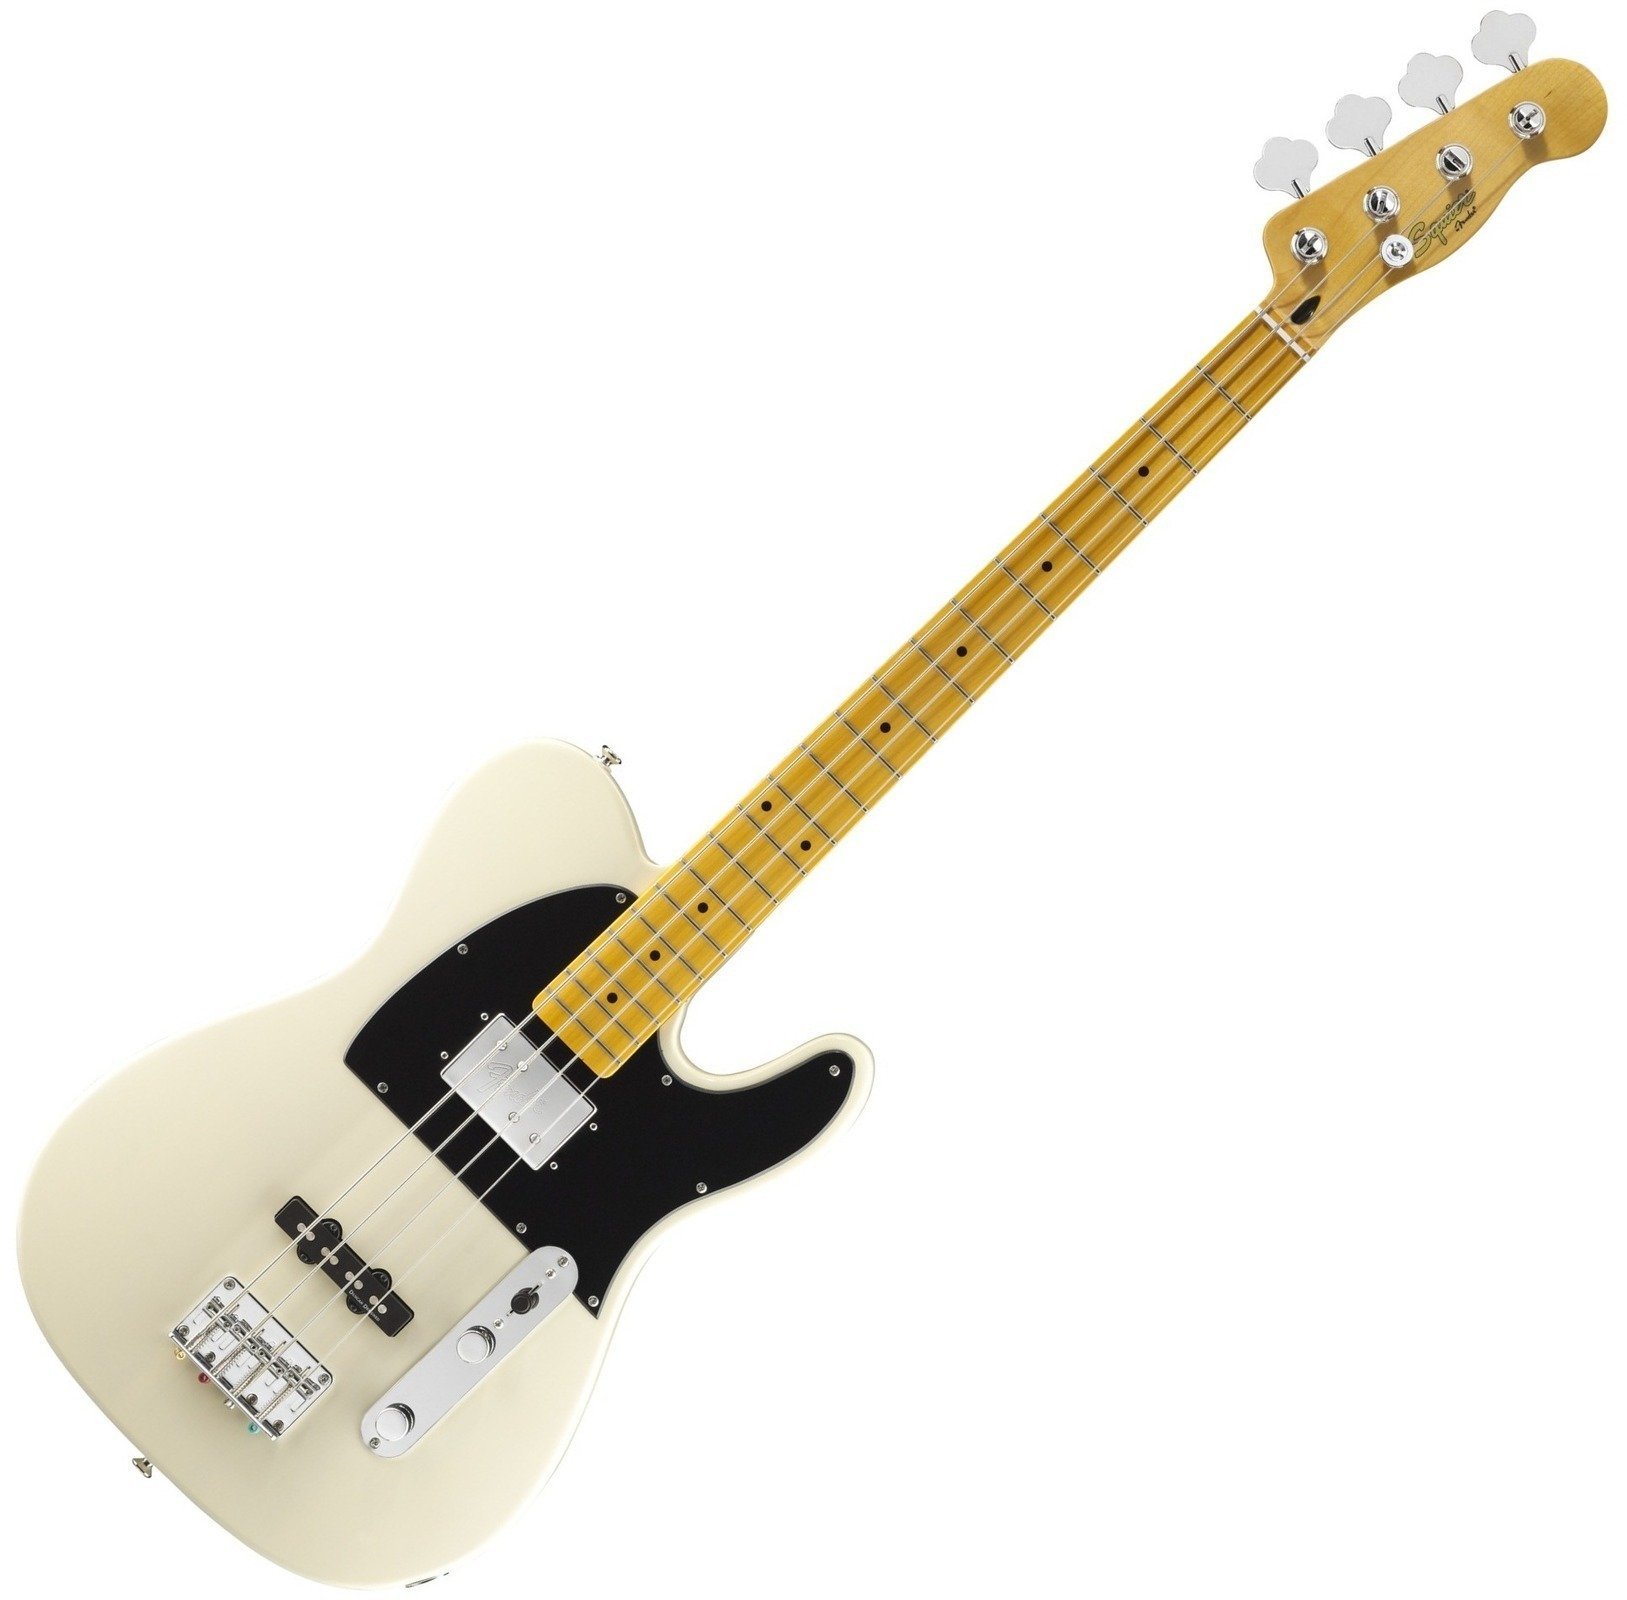 E-Bass Fender Squier Vintage Modified Telecaster Bass Vintage Blonde